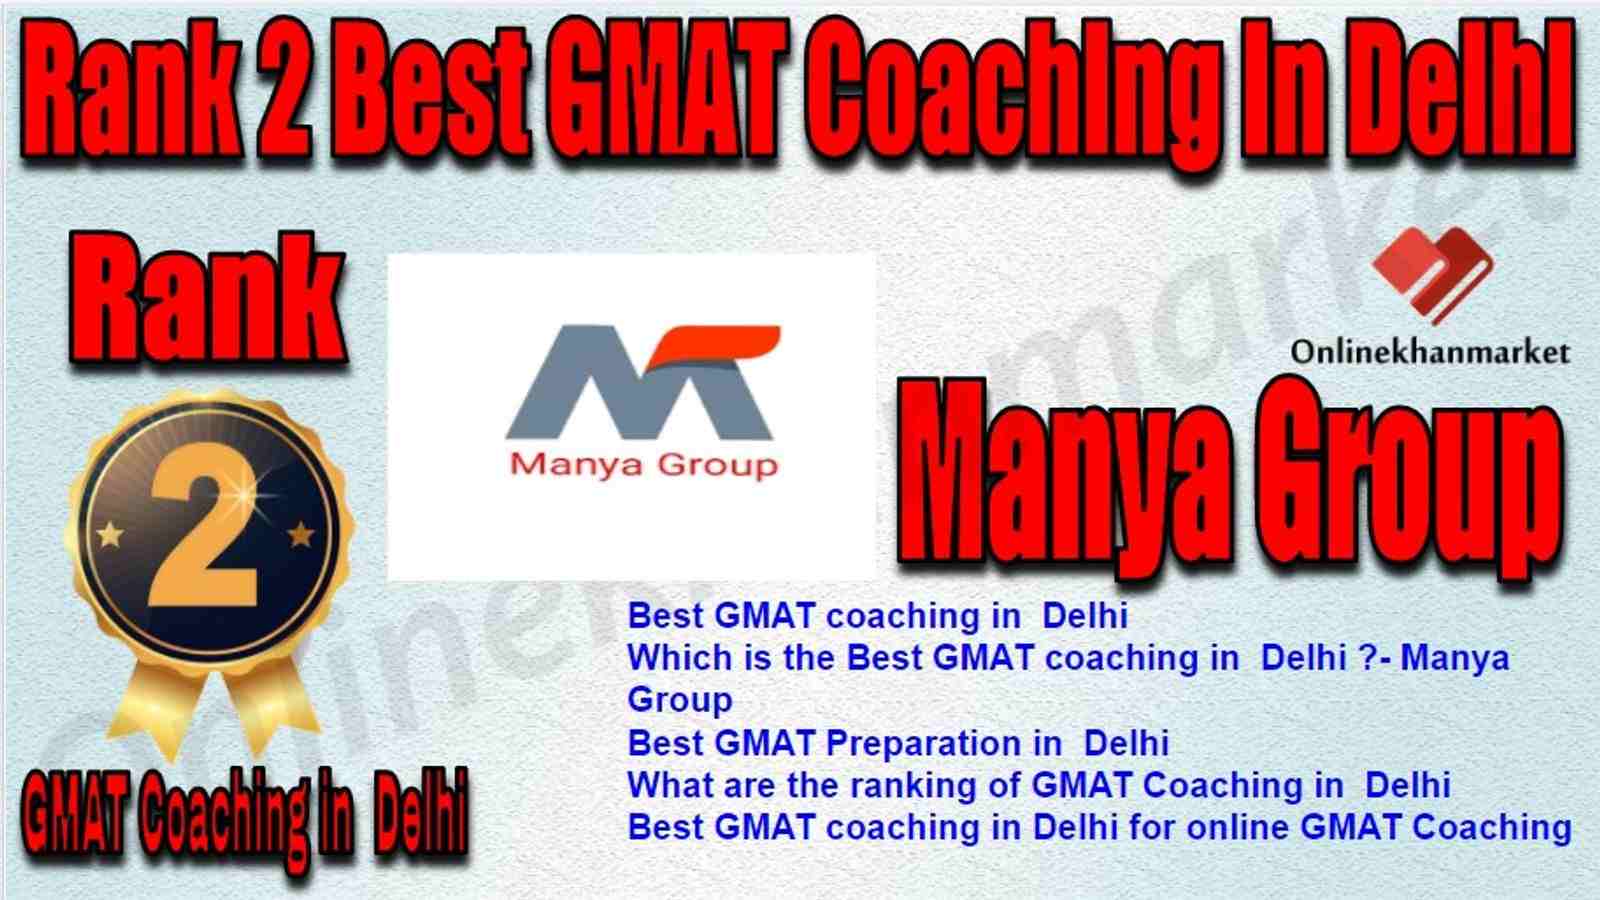 Rank 2 Best GMAT Coaching in Delhi